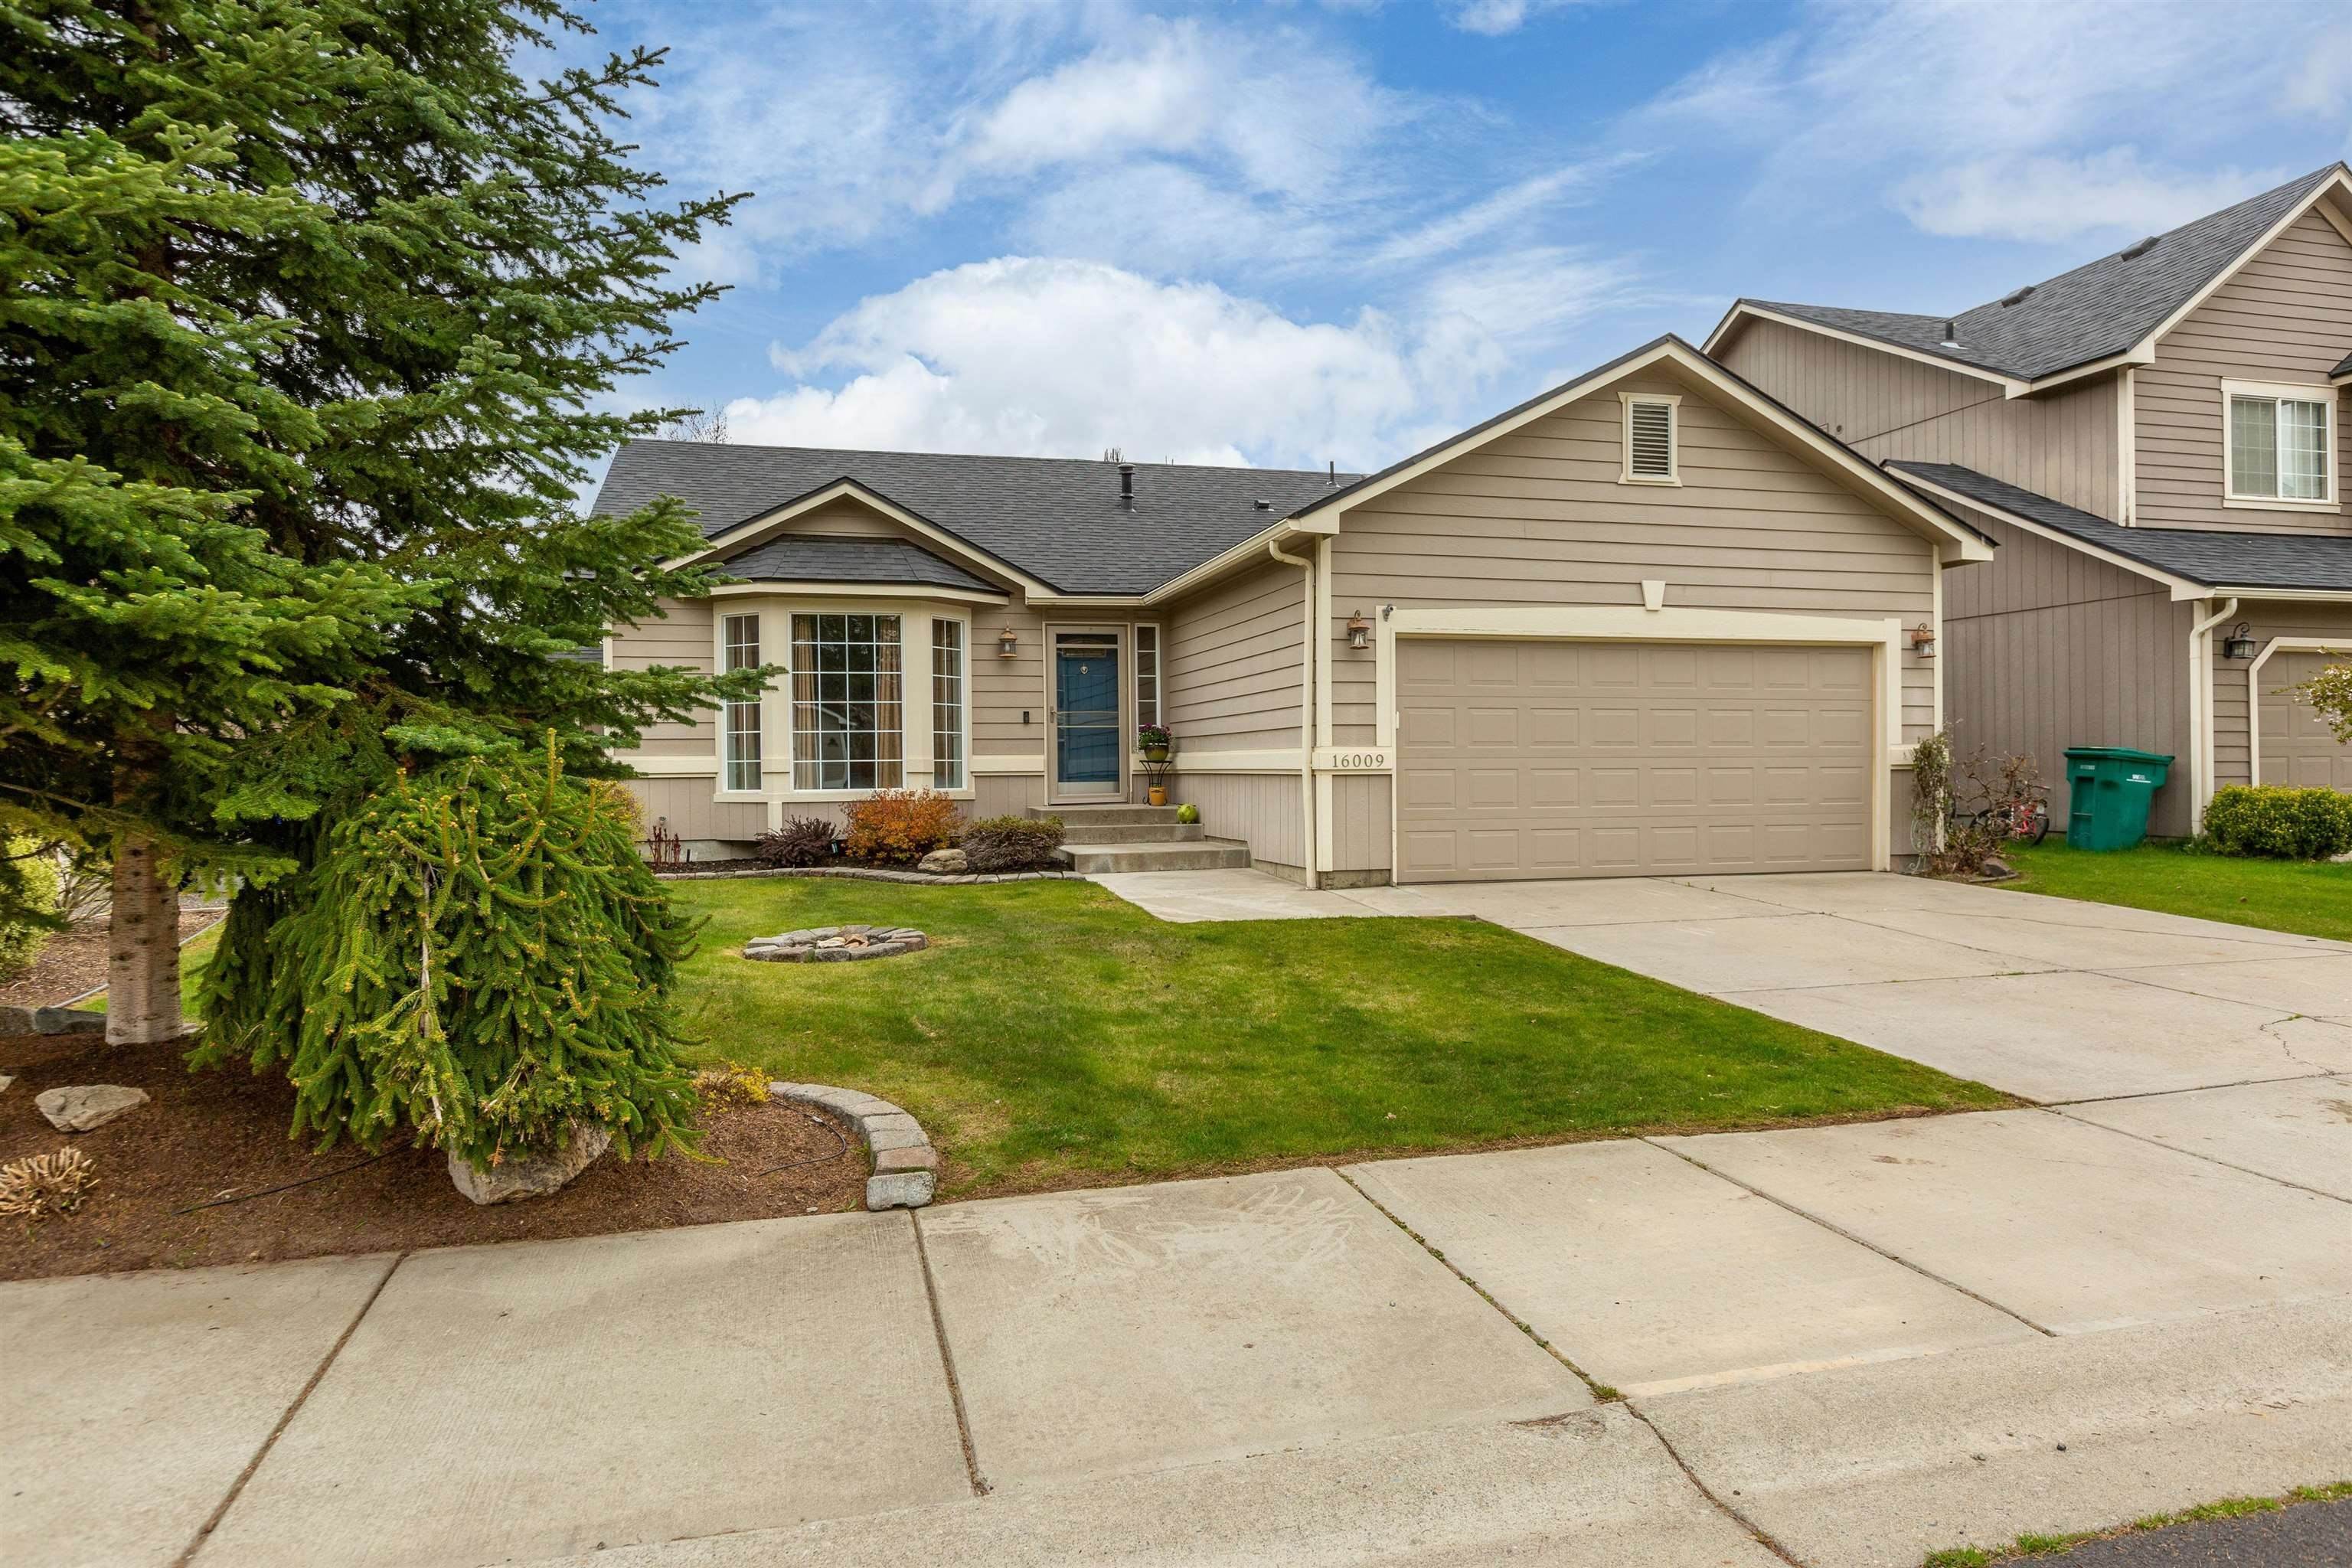 2. Single Family Homes for Sale at 16009 N Franklin Street Spokane, Washington 99208 United States